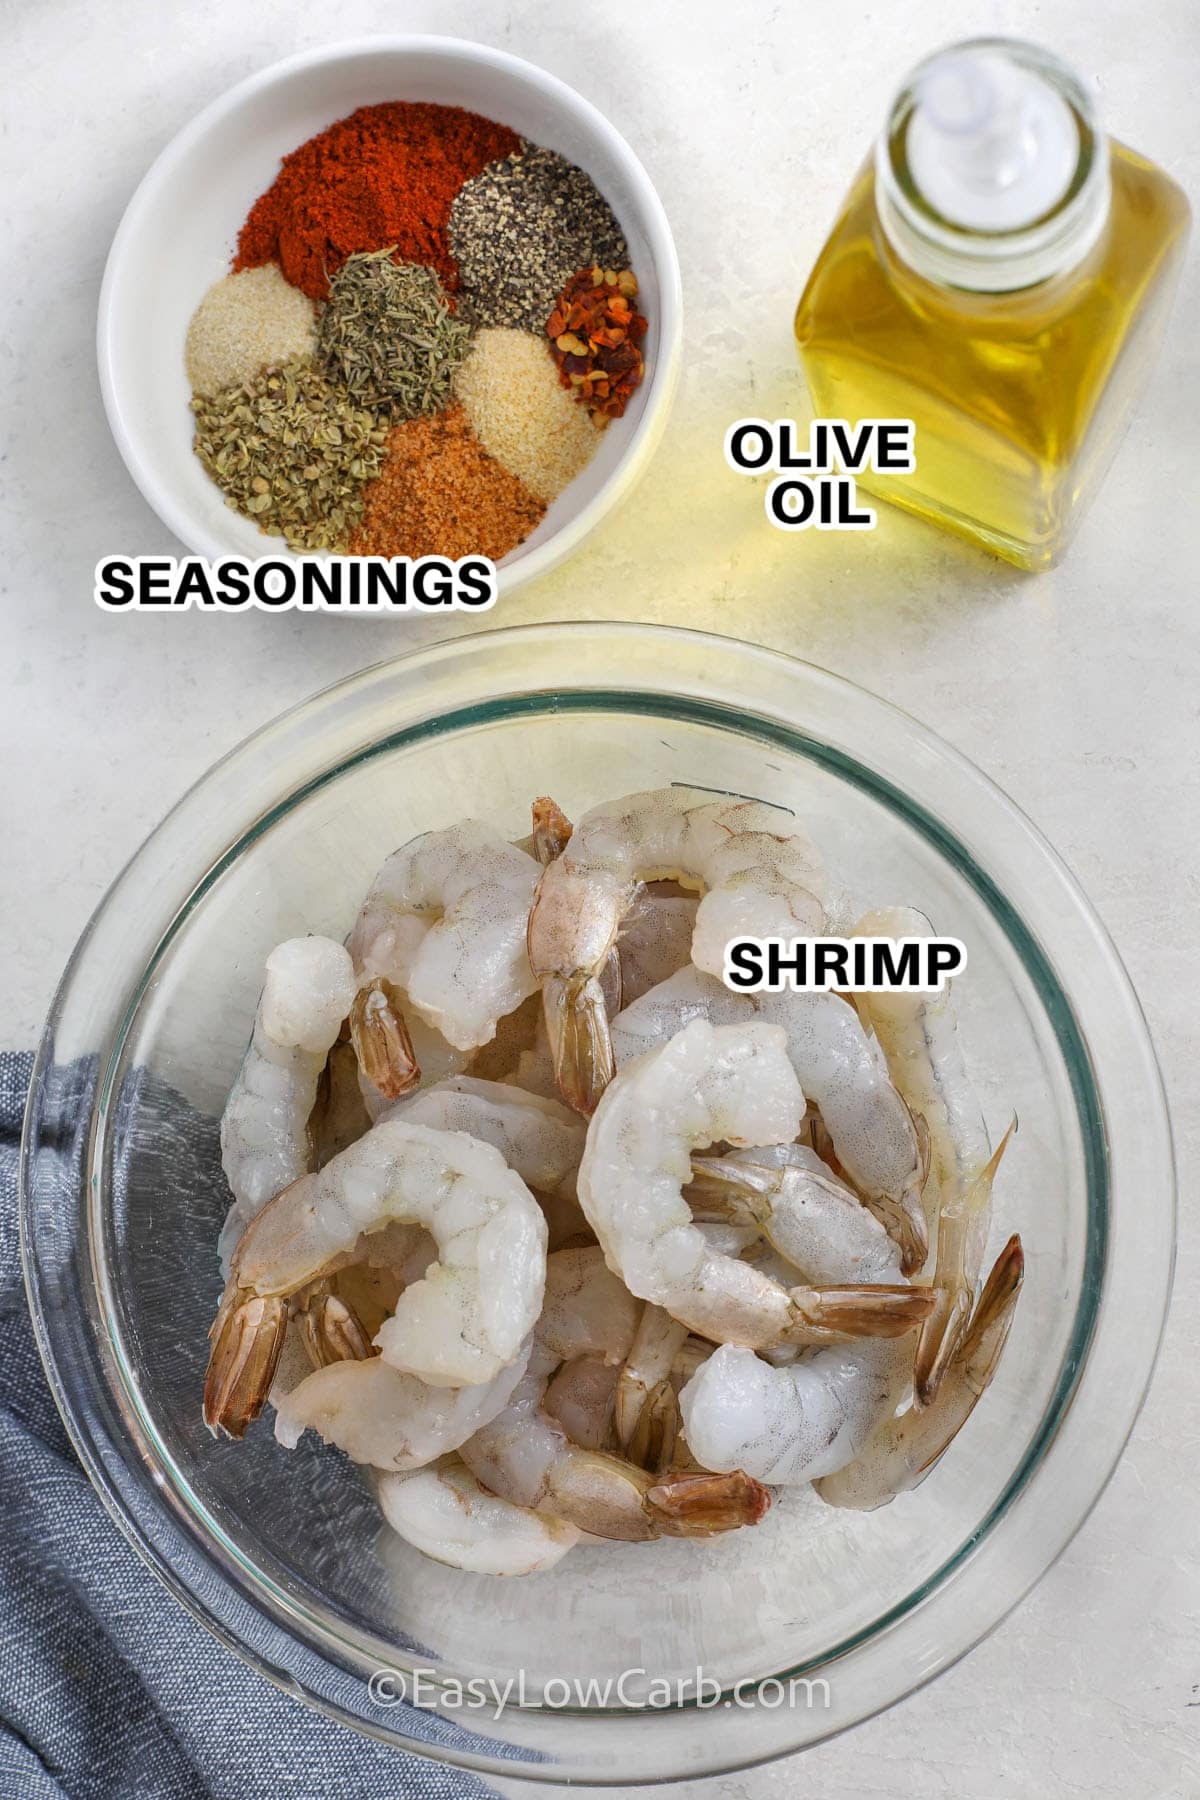 ingredients to make cajun shrimp labeled: seasonings, olive oil, and shrimp